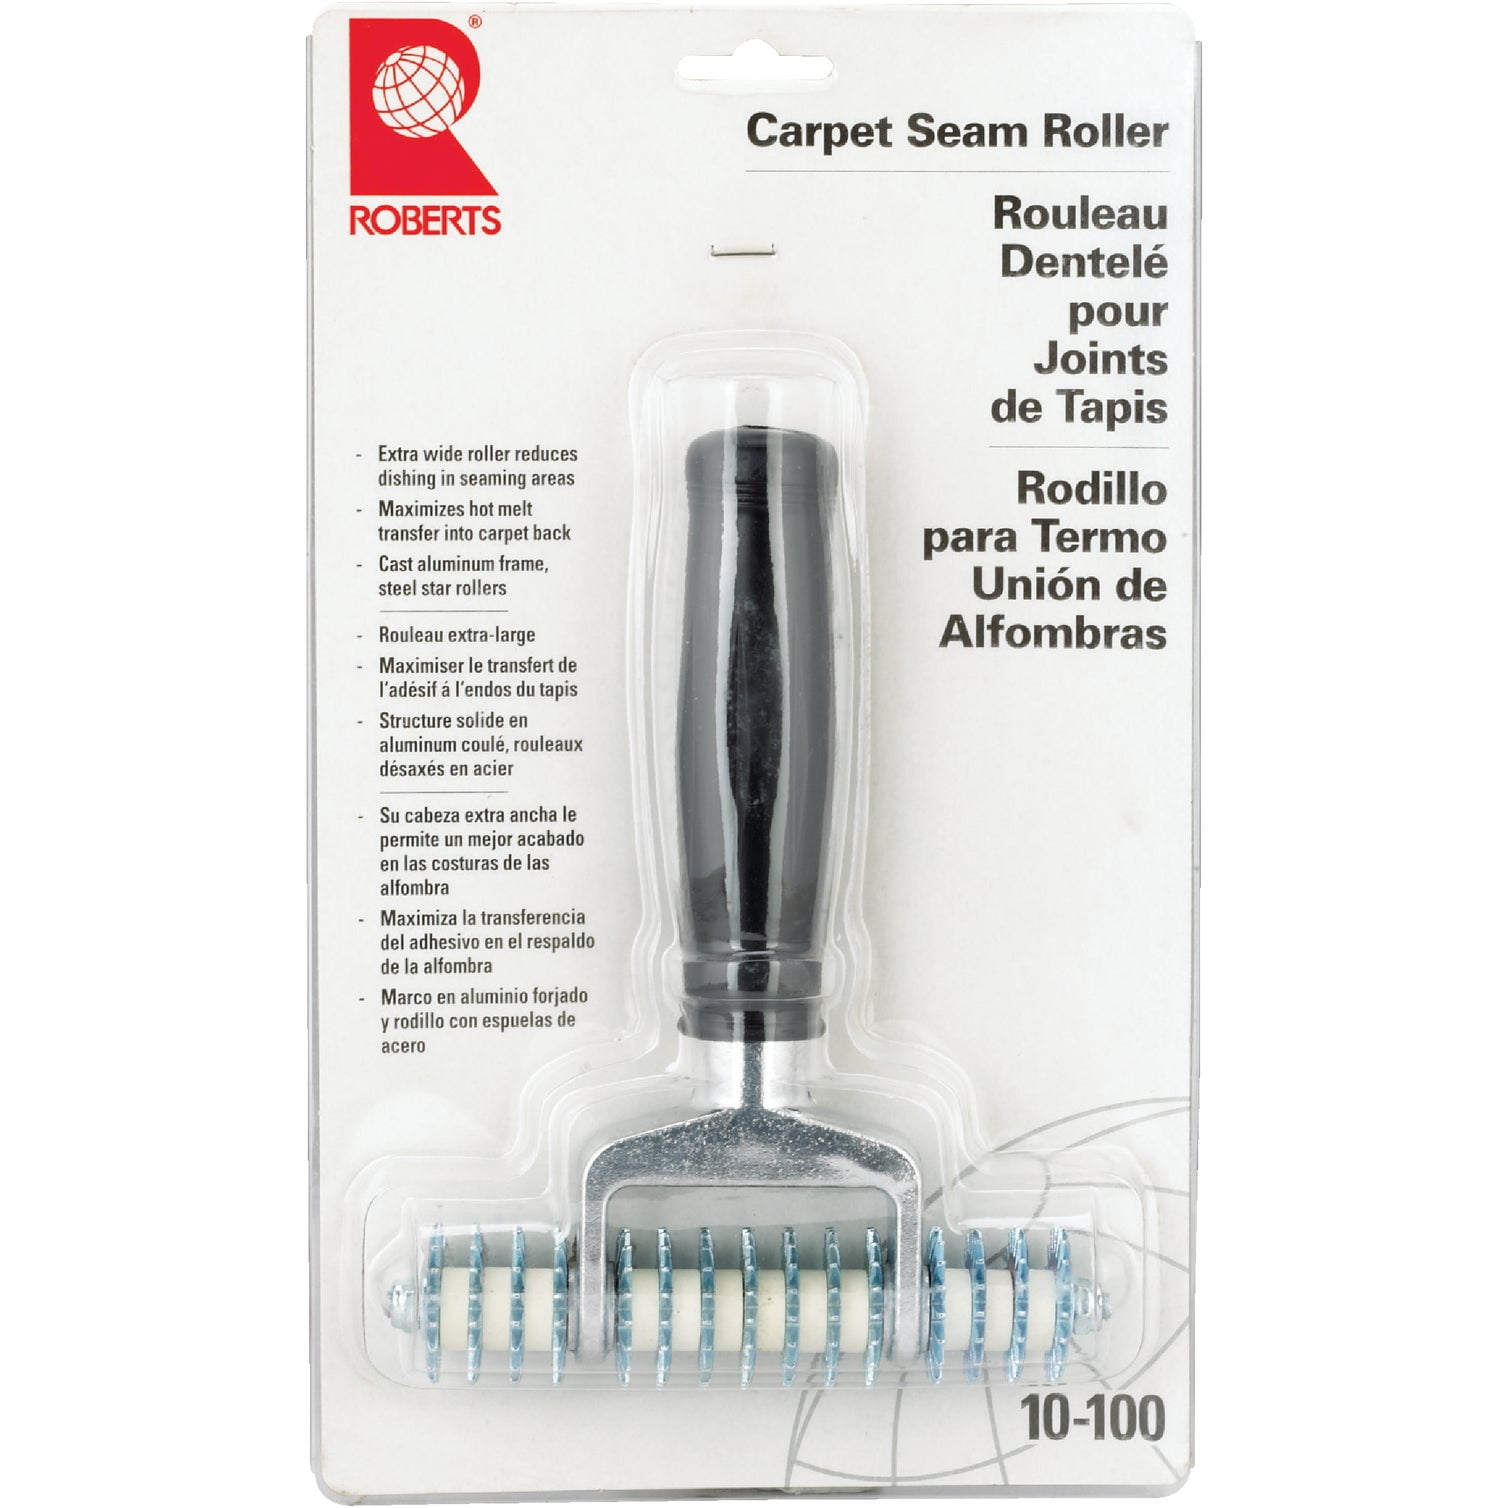 Roberts 3 1/2 Star Carpet Seam Roller